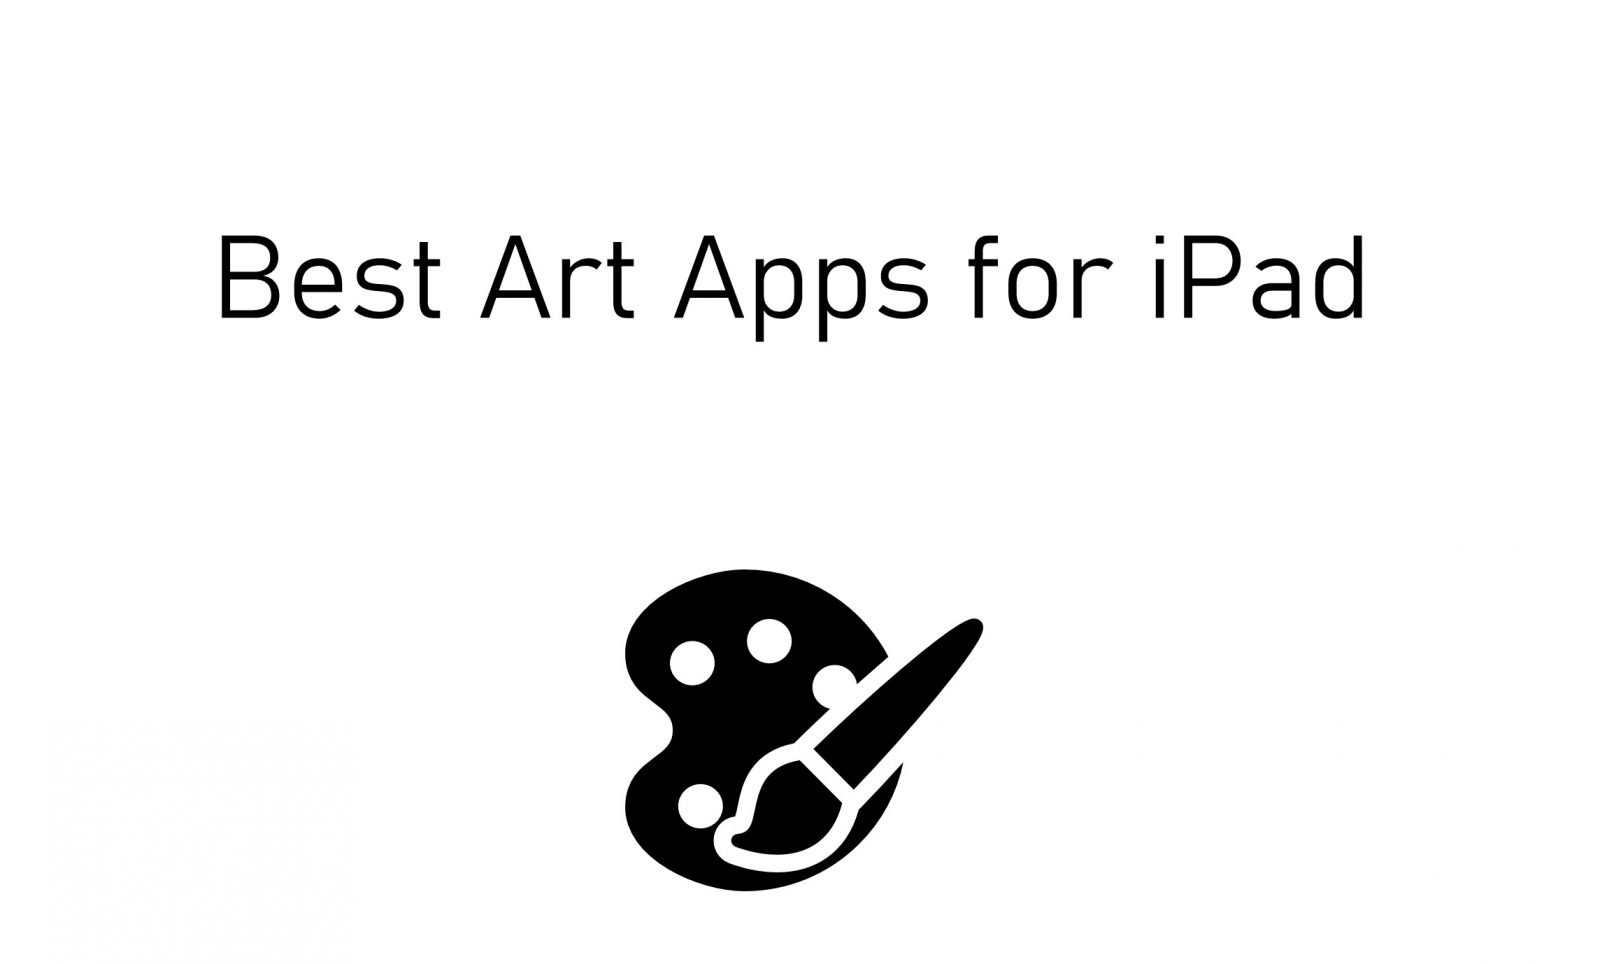 Best Art apps for iPad